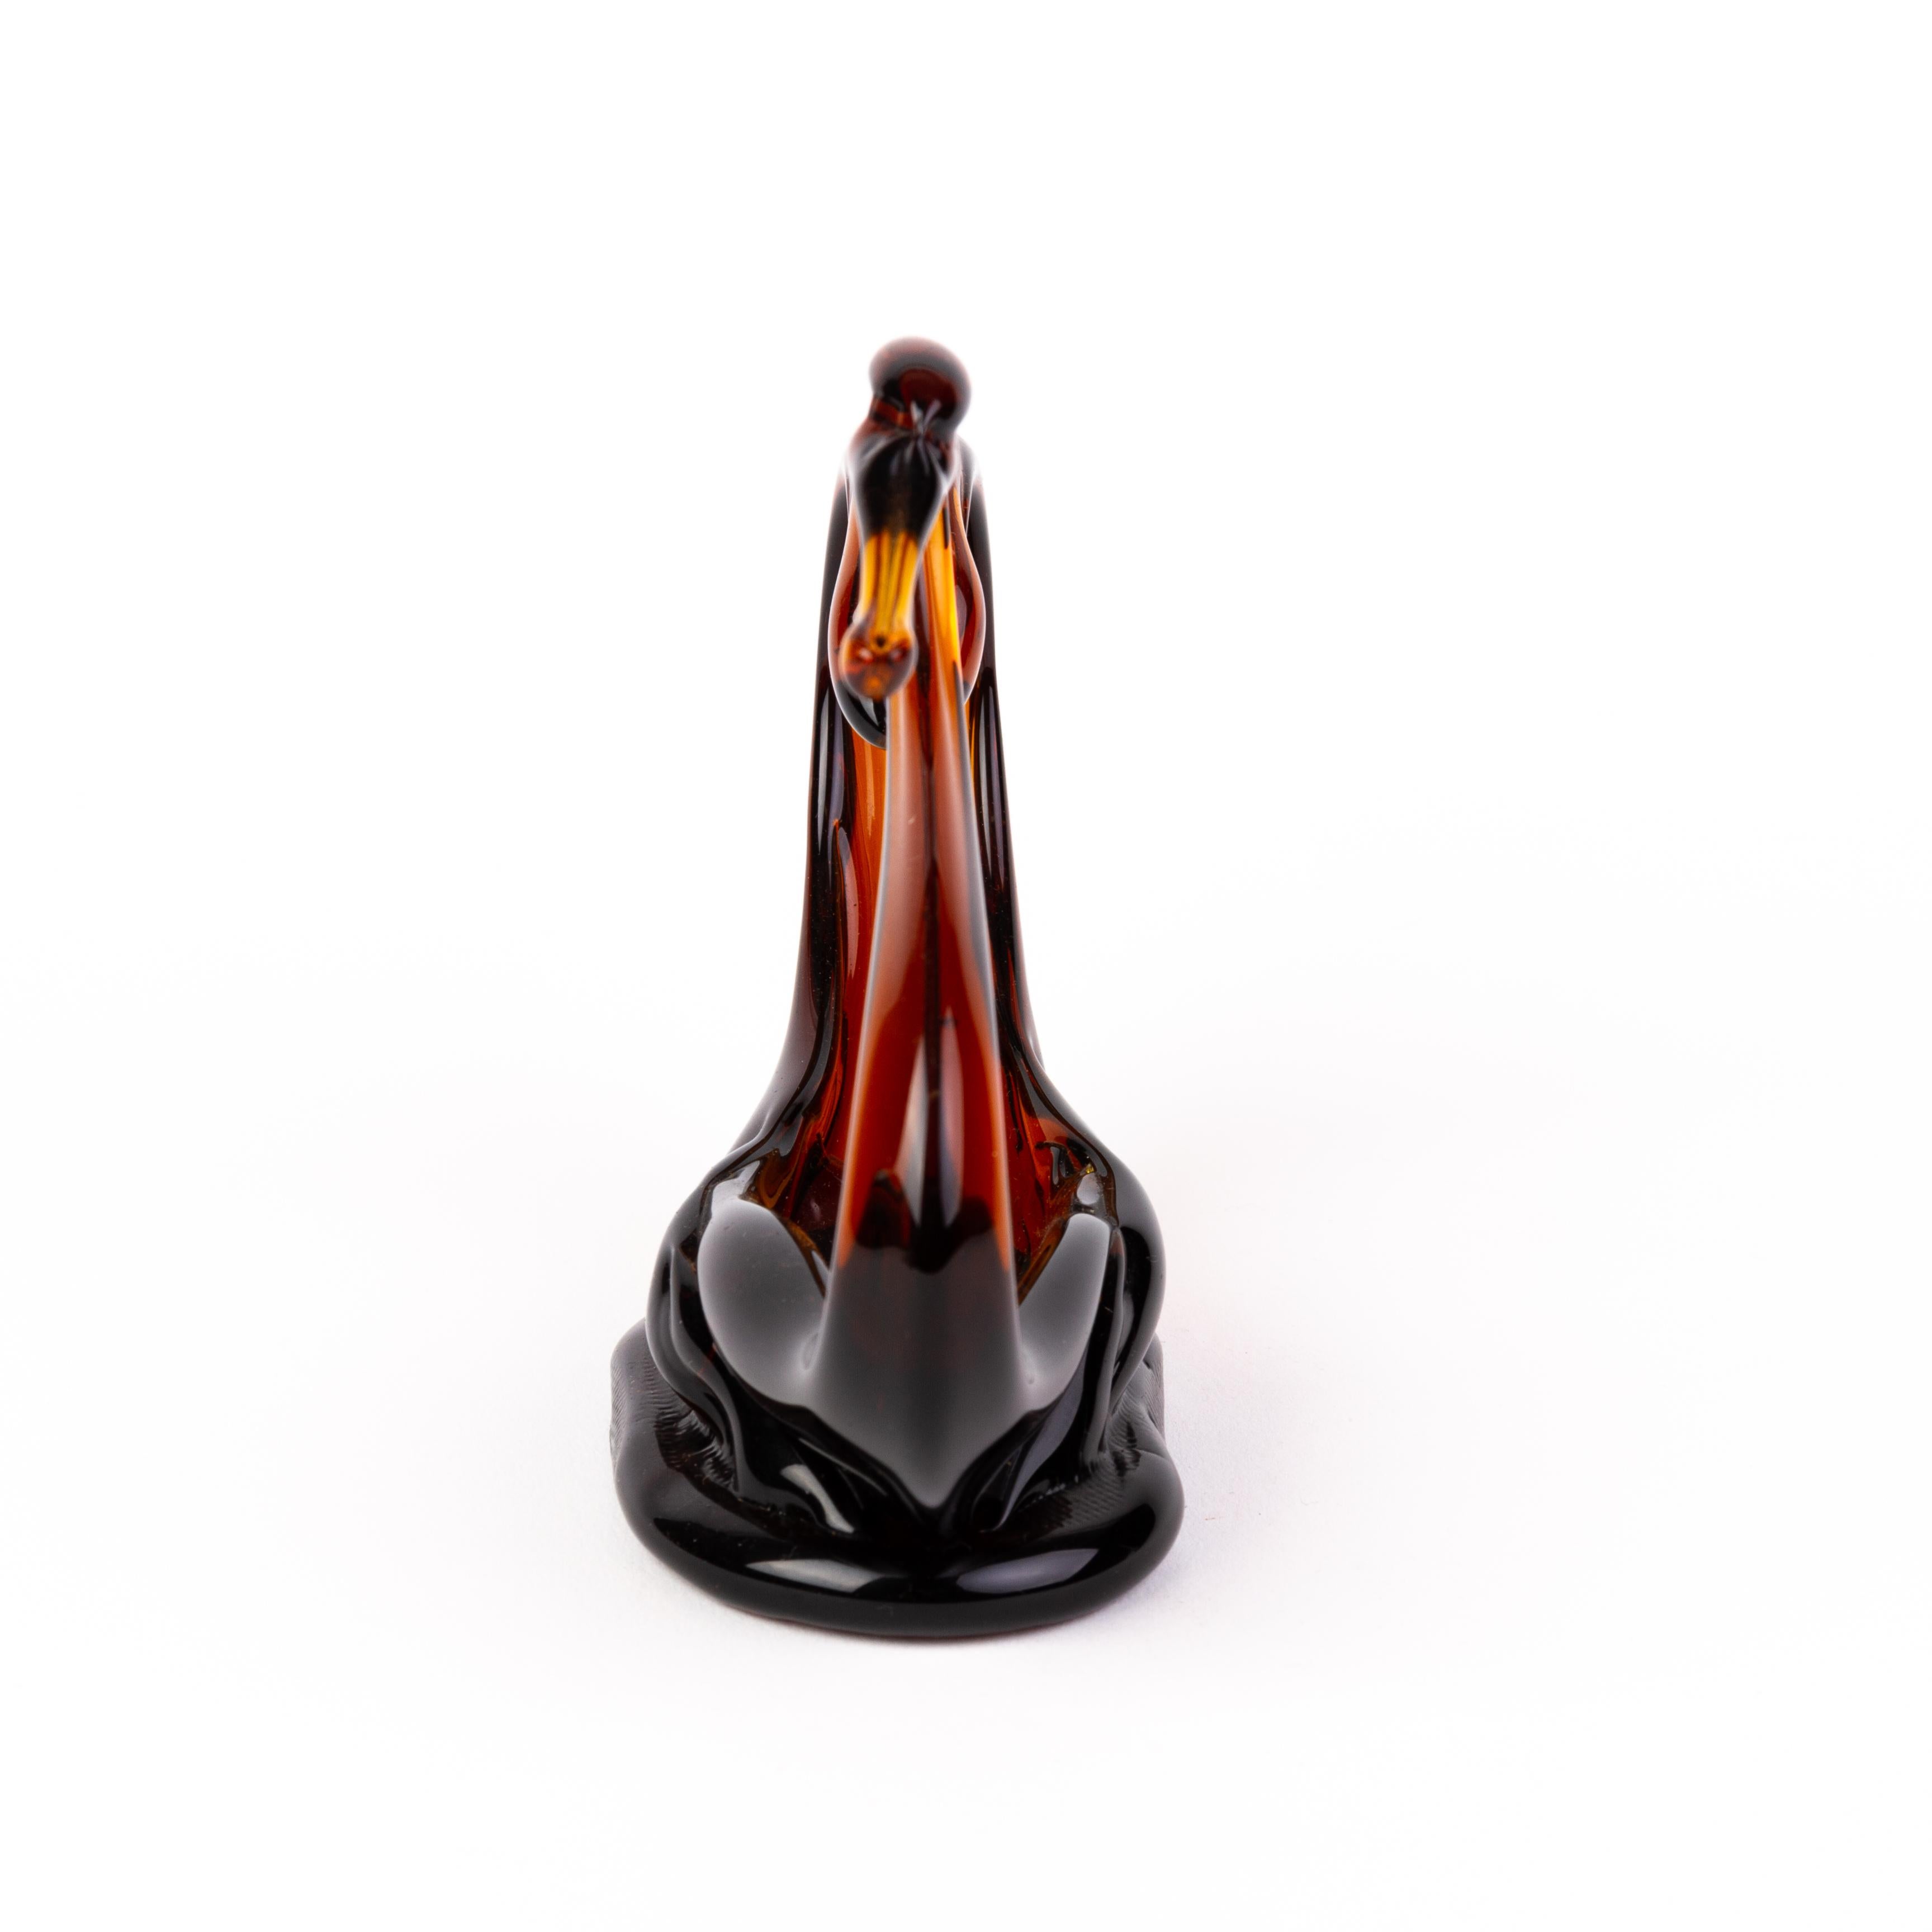 Murano Venetian Glass Designer Swan Sculpture 
Good condition
Free international shipping.